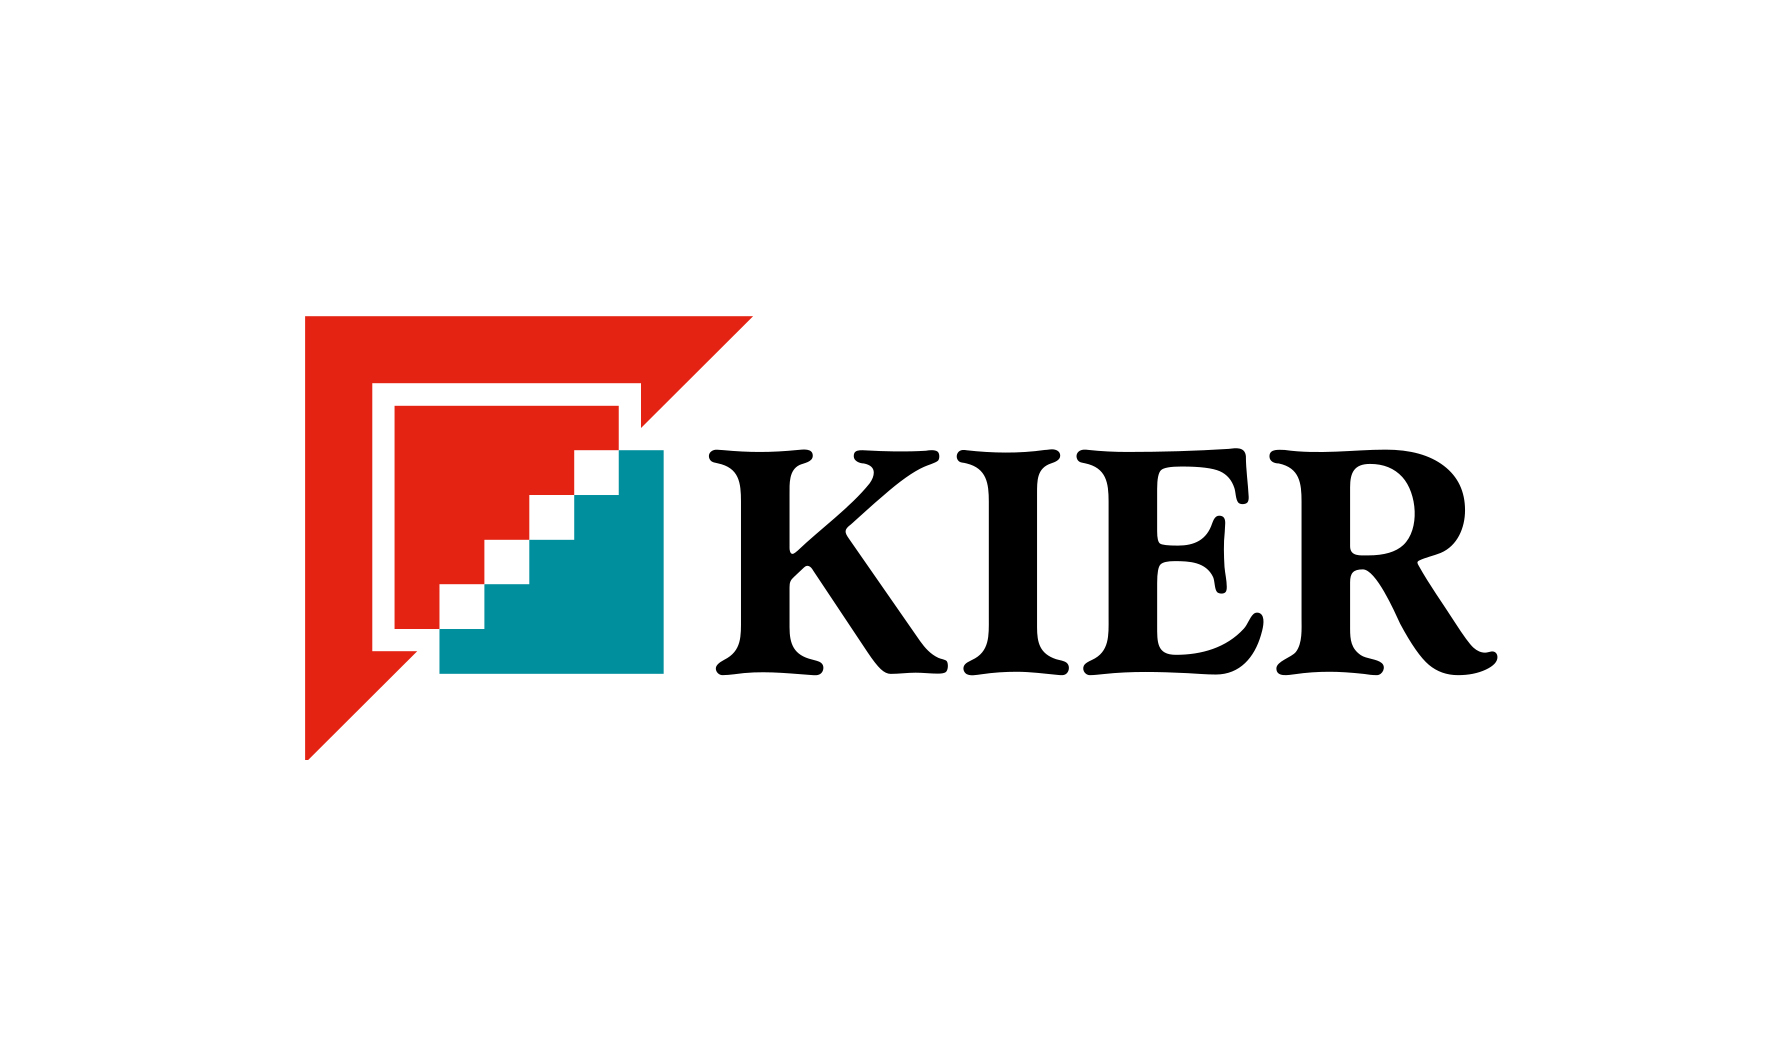 Kier Group Logo